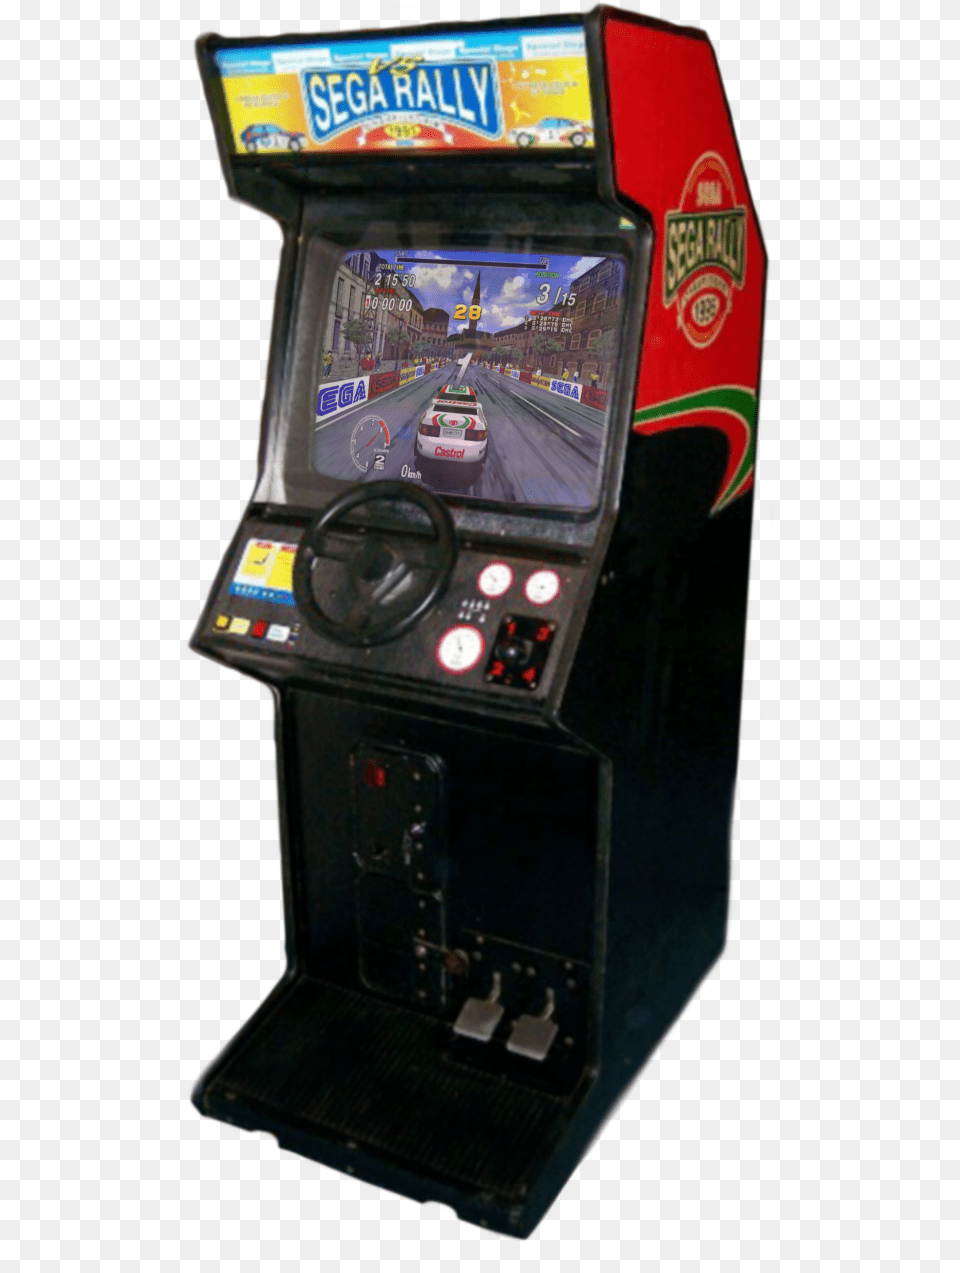 Sega Rally Arcade Machine Hire Sega Rally, Arcade Game Machine, Game, Car, Transportation Free Png